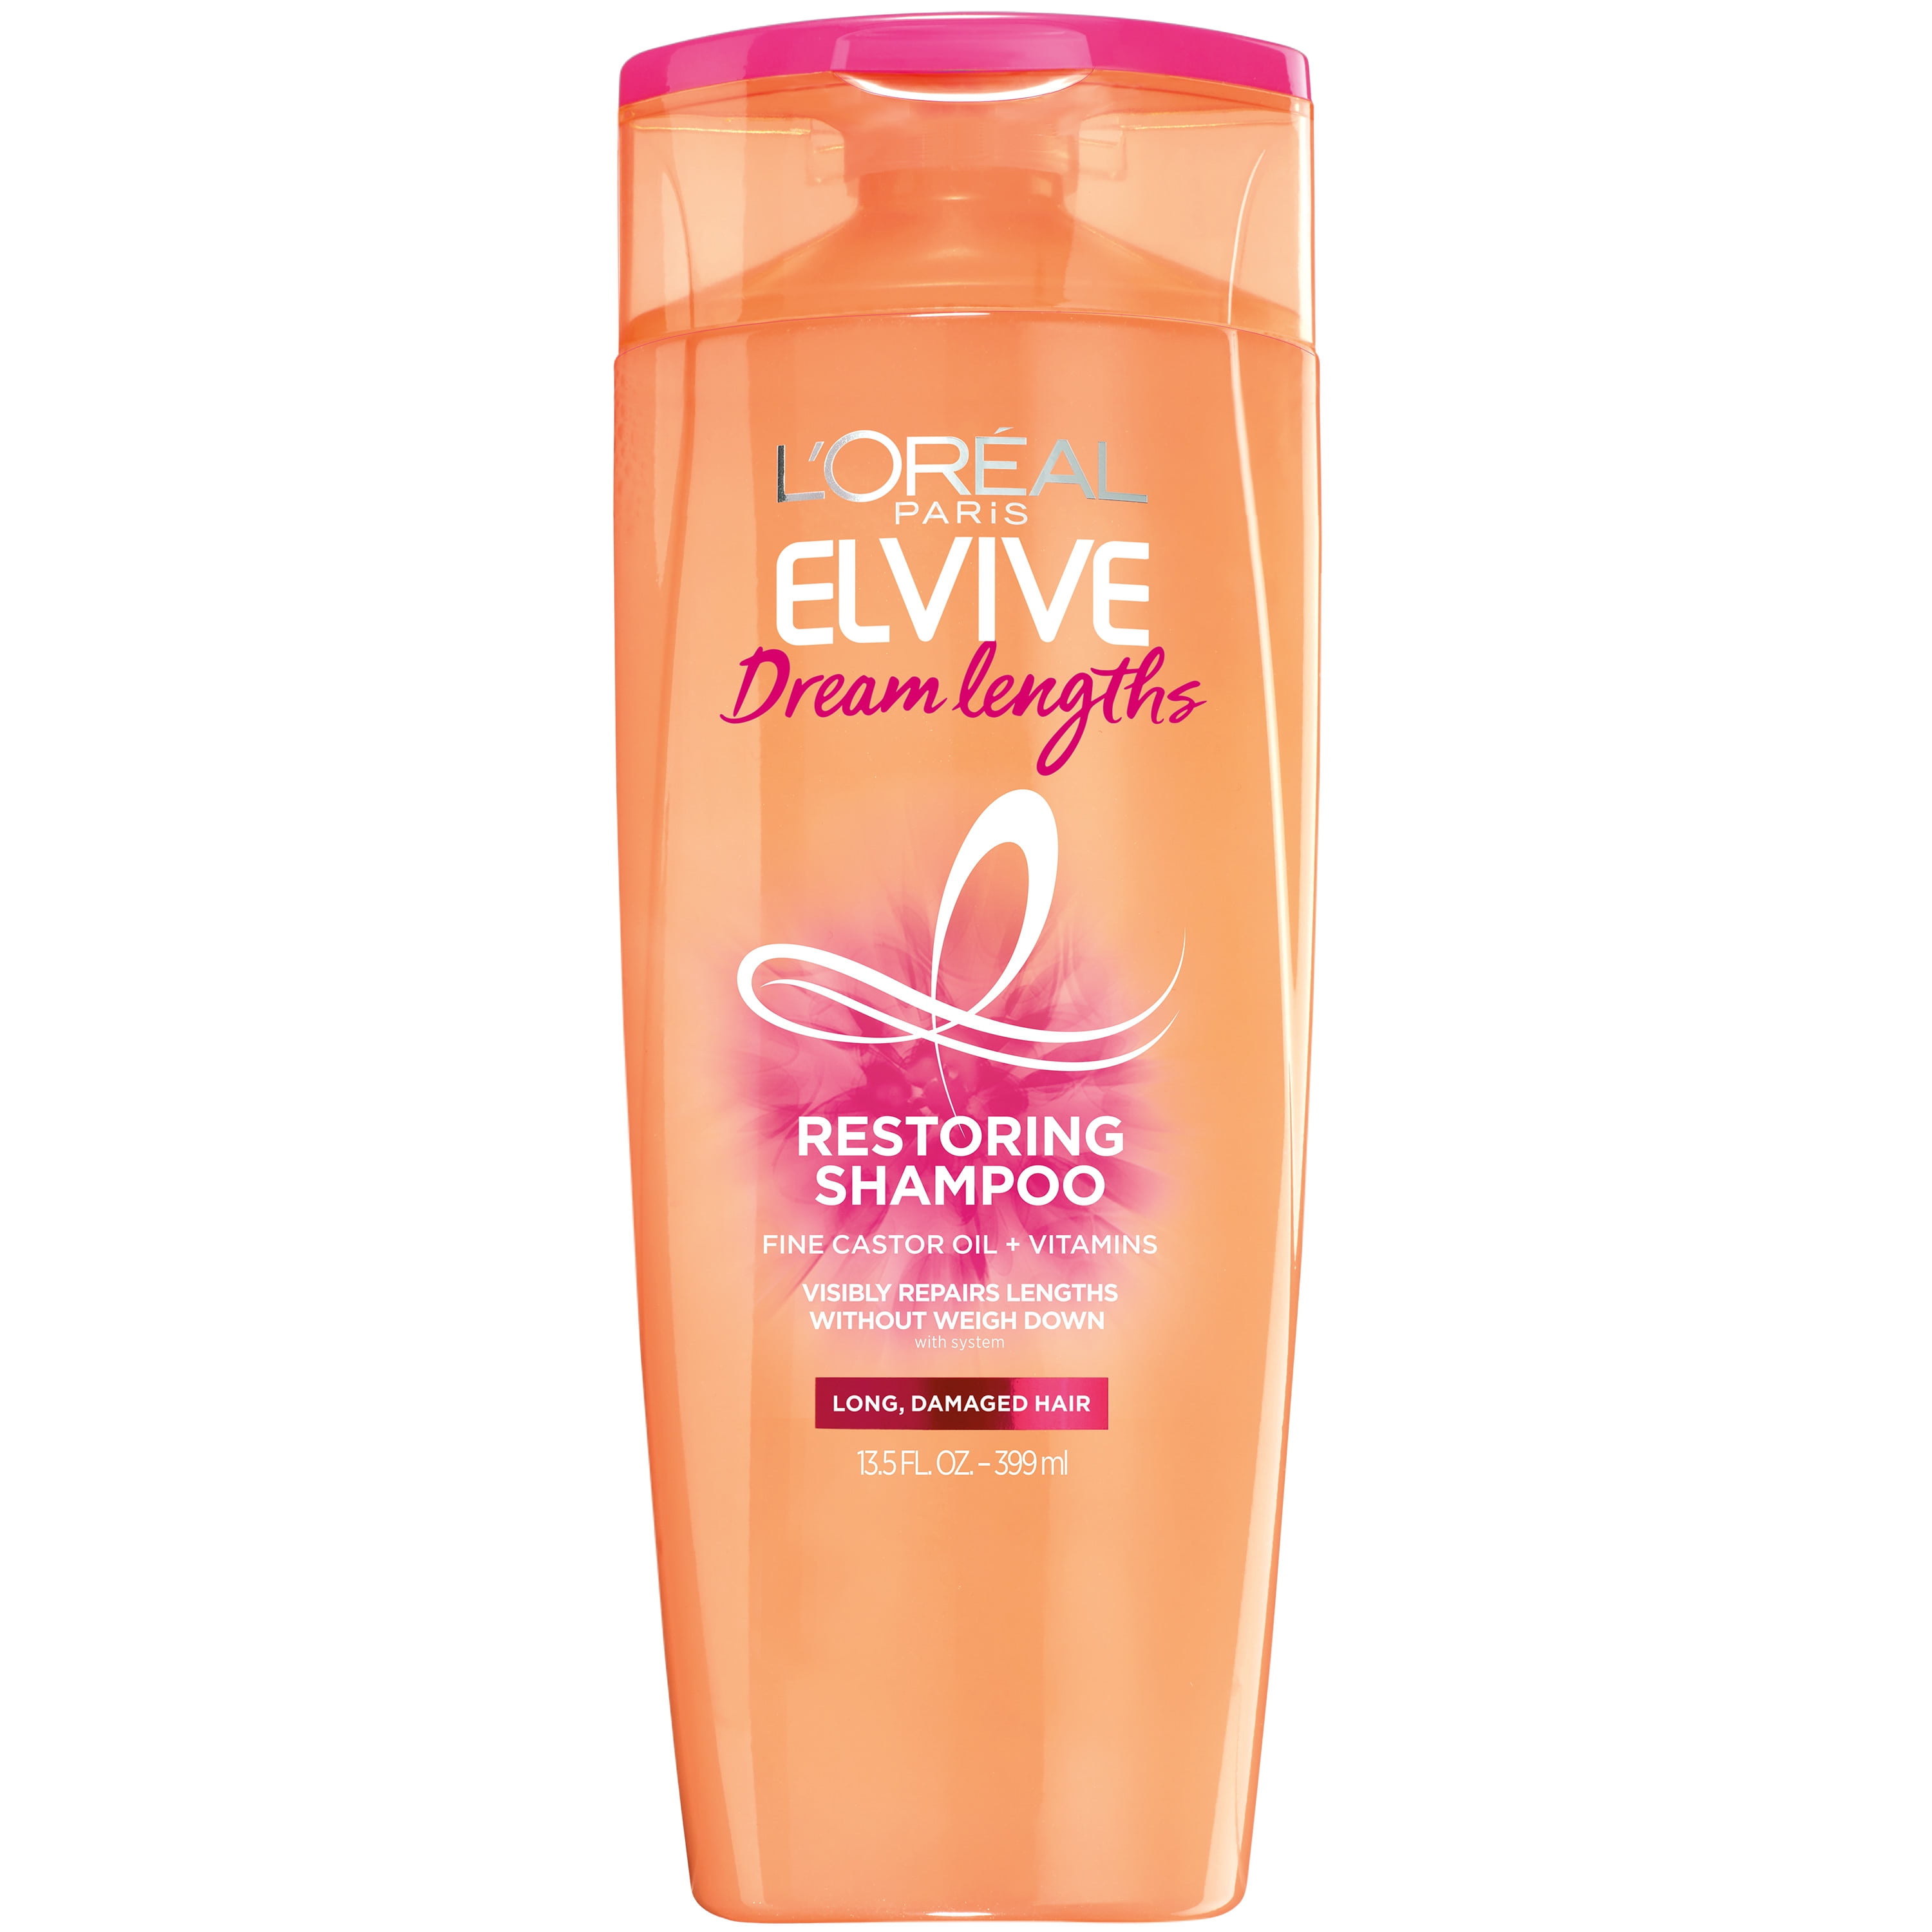 L'Oreal Paris Elvive Dream Lengths Restoring Shampoo for Long, Damaged Hair, 13.5 fl oz